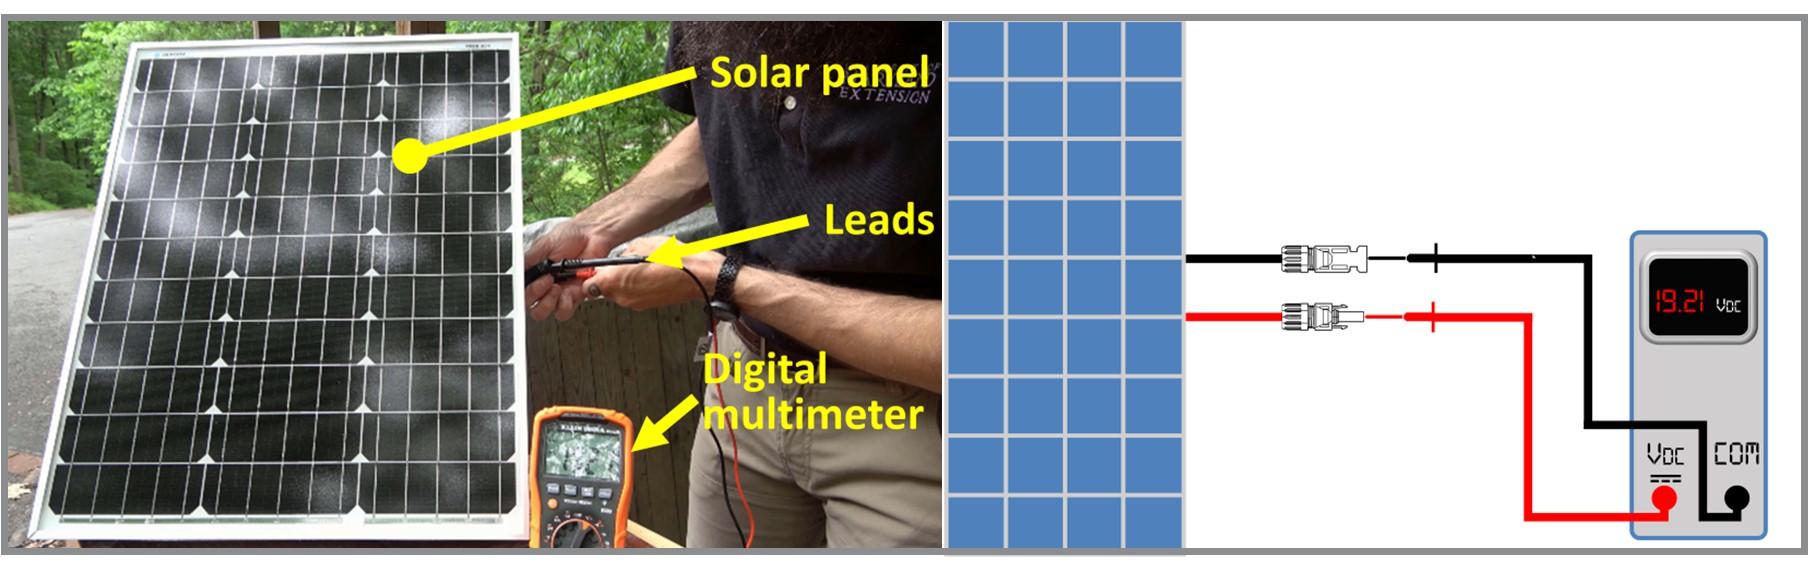 Solar panel, leads, digital multimeter diagram